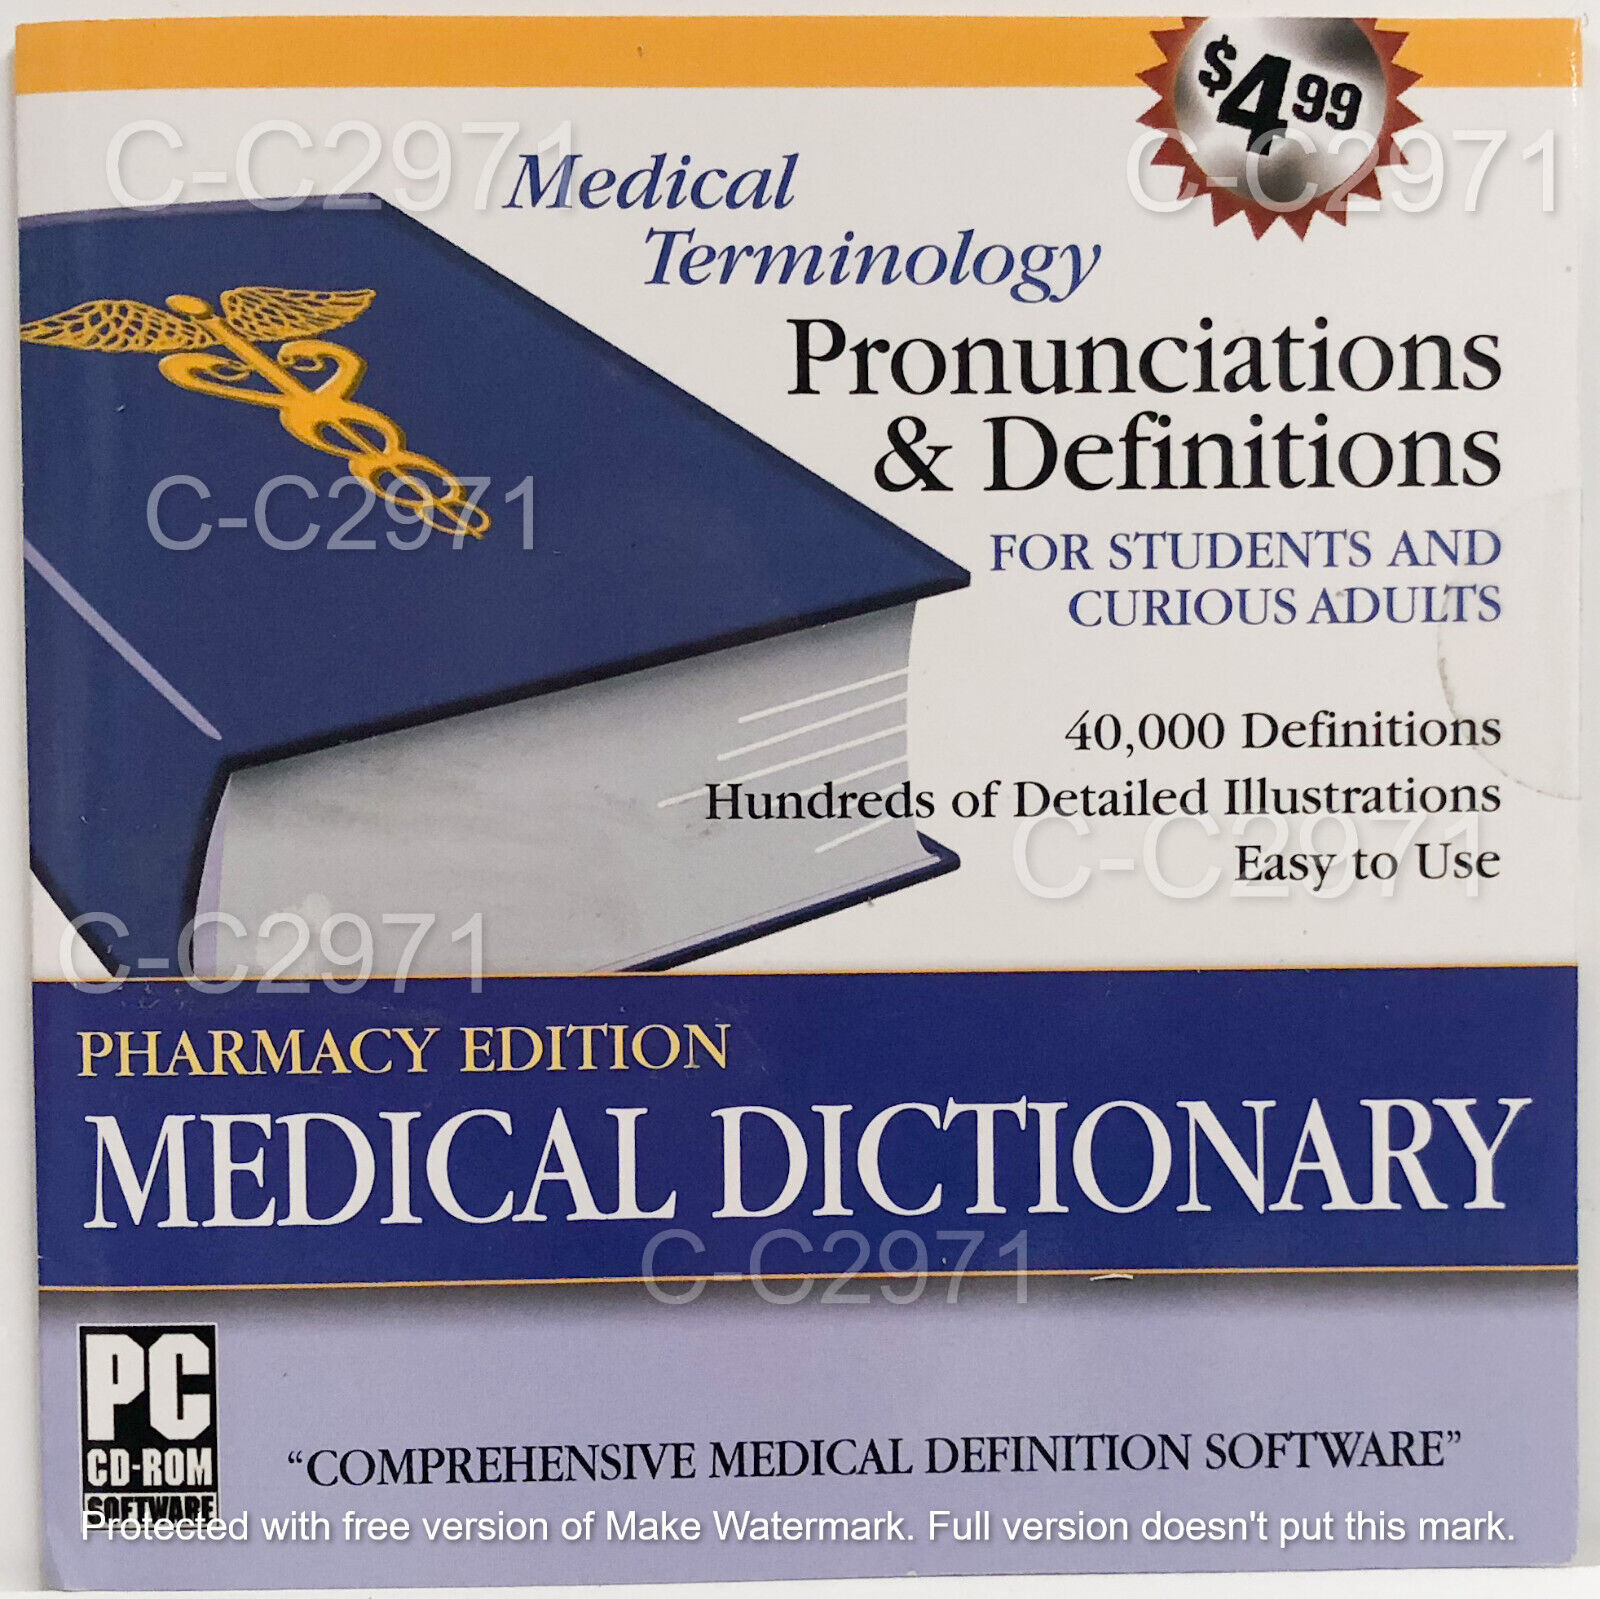 Mega Systems Pharmacy Edition Medical Dictionary Pronunciations & Definitions Cd